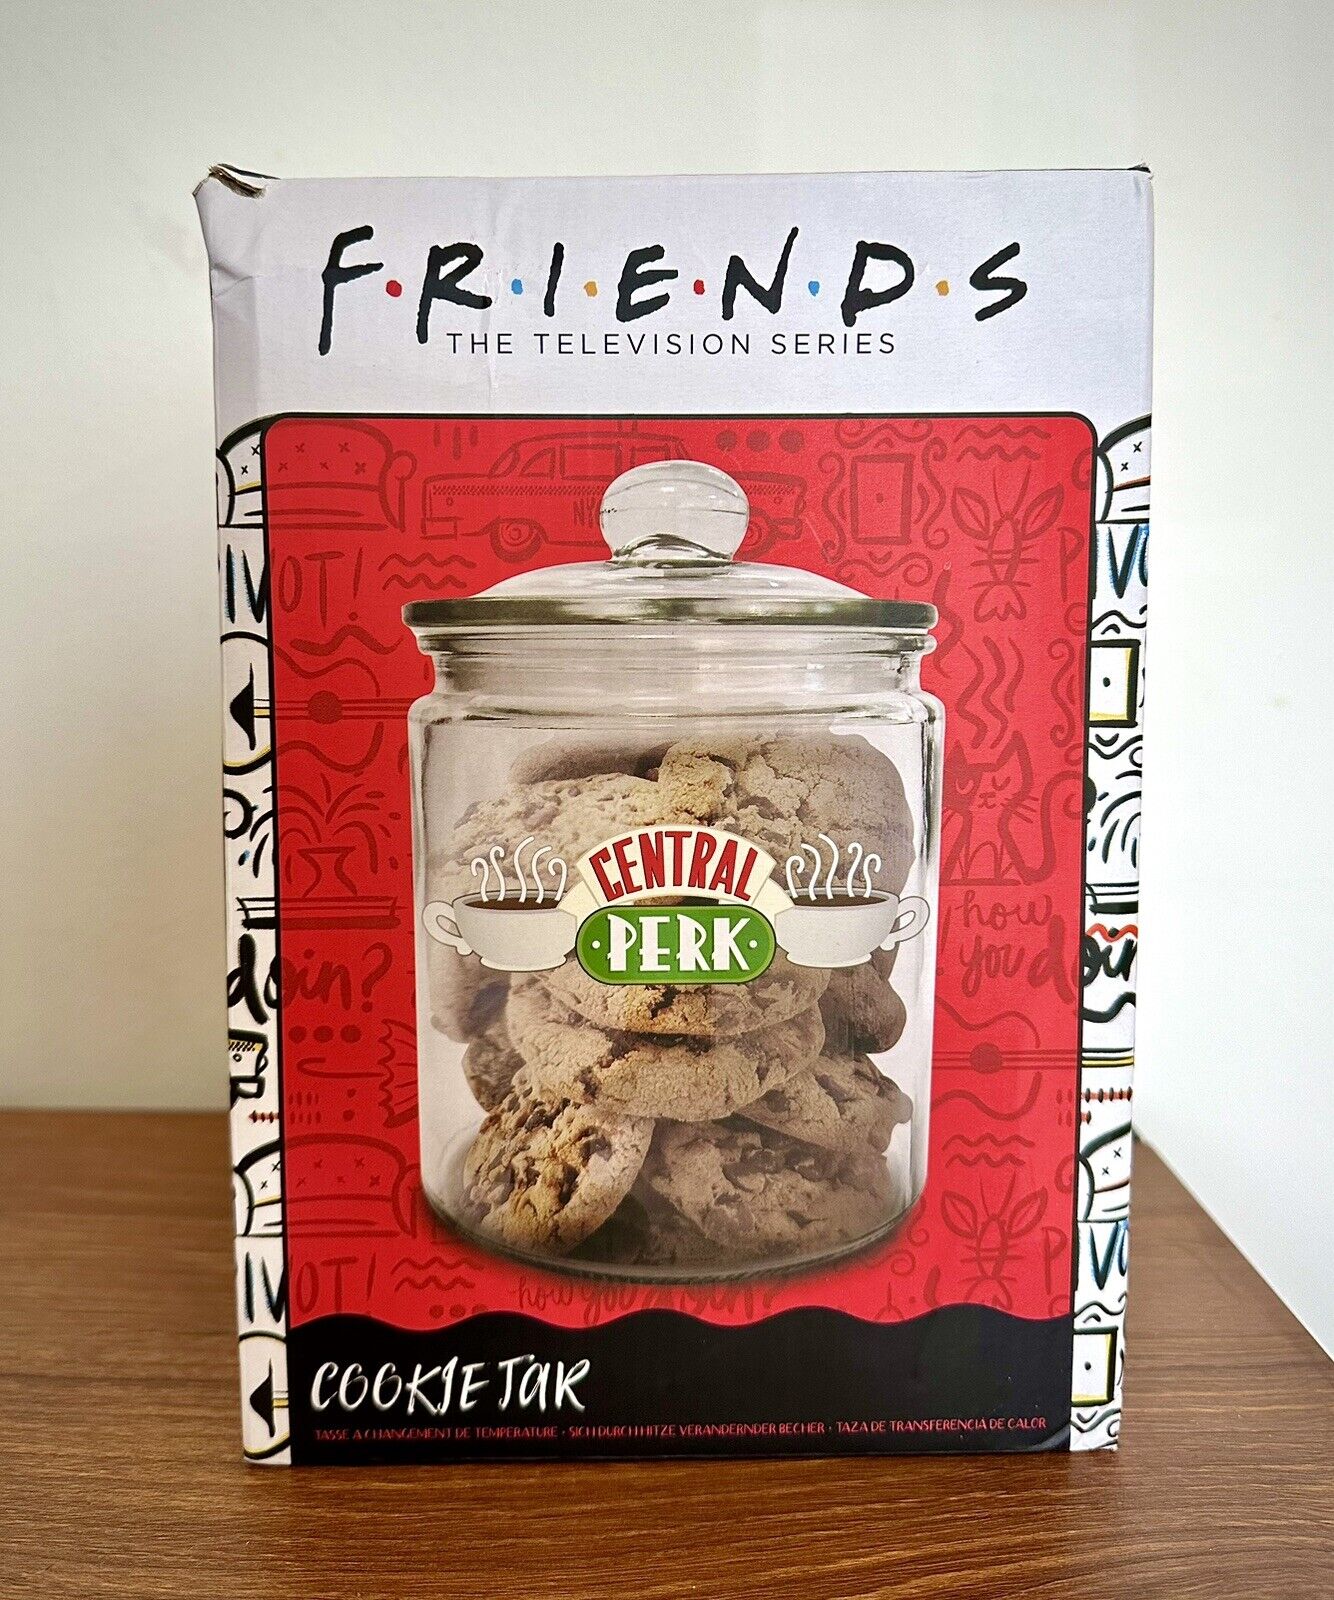 Friends TV Show Merchandise - Central Perk Cookie Jar - Box Damage - New